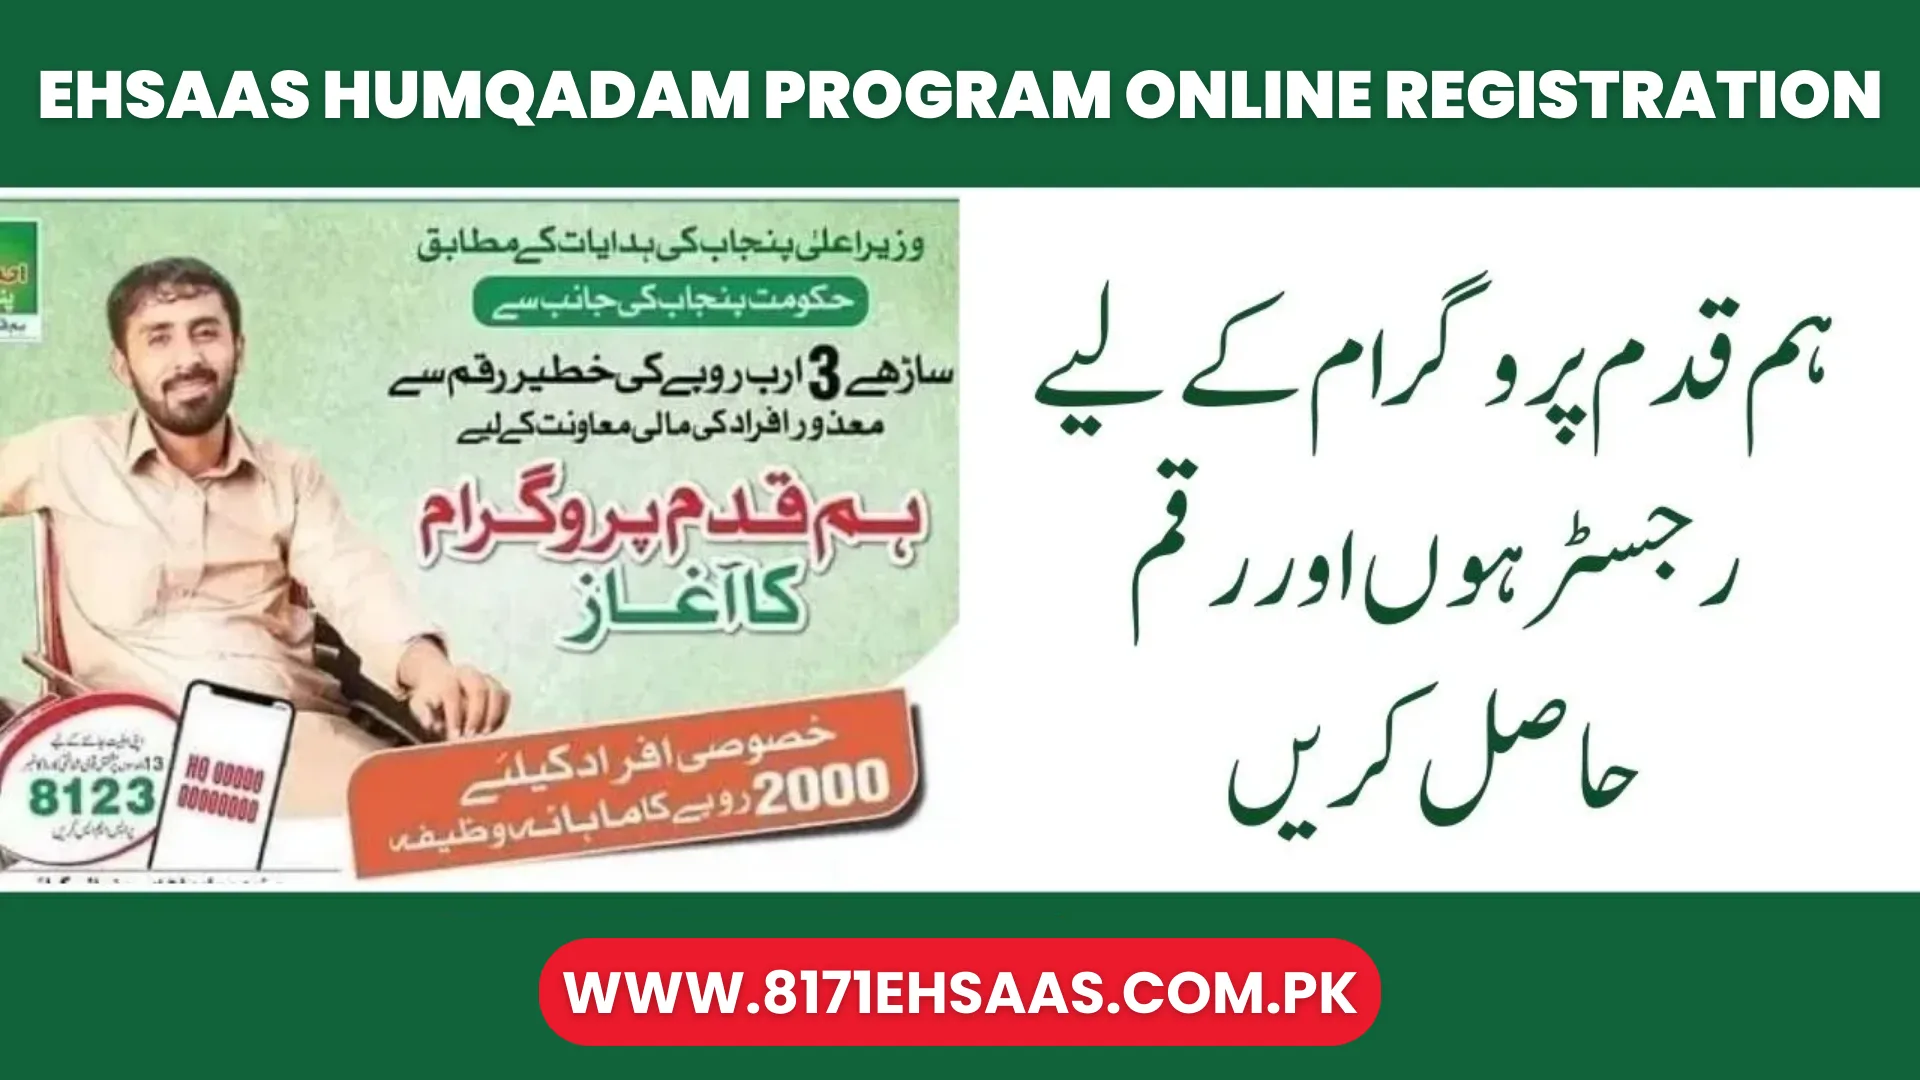 Ehsaas Humqadam Program Online Registration